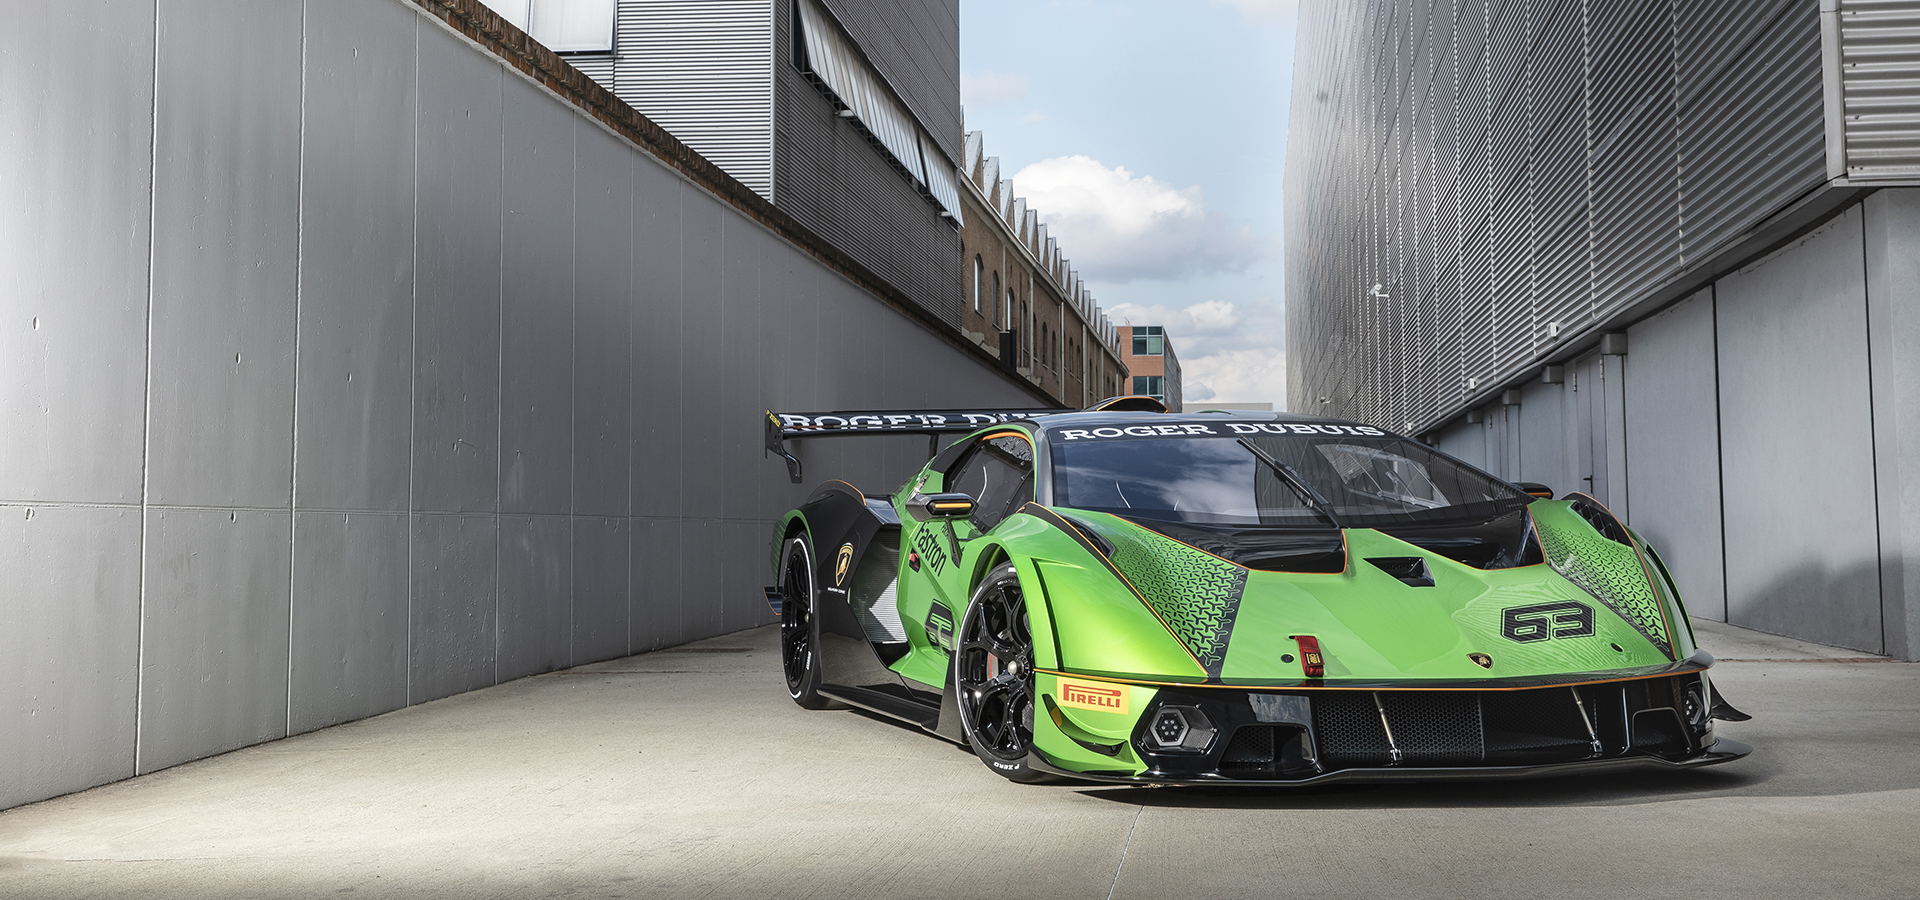 Lamborghini Essenza SCV12 debuts in the Asphalt 9 video game